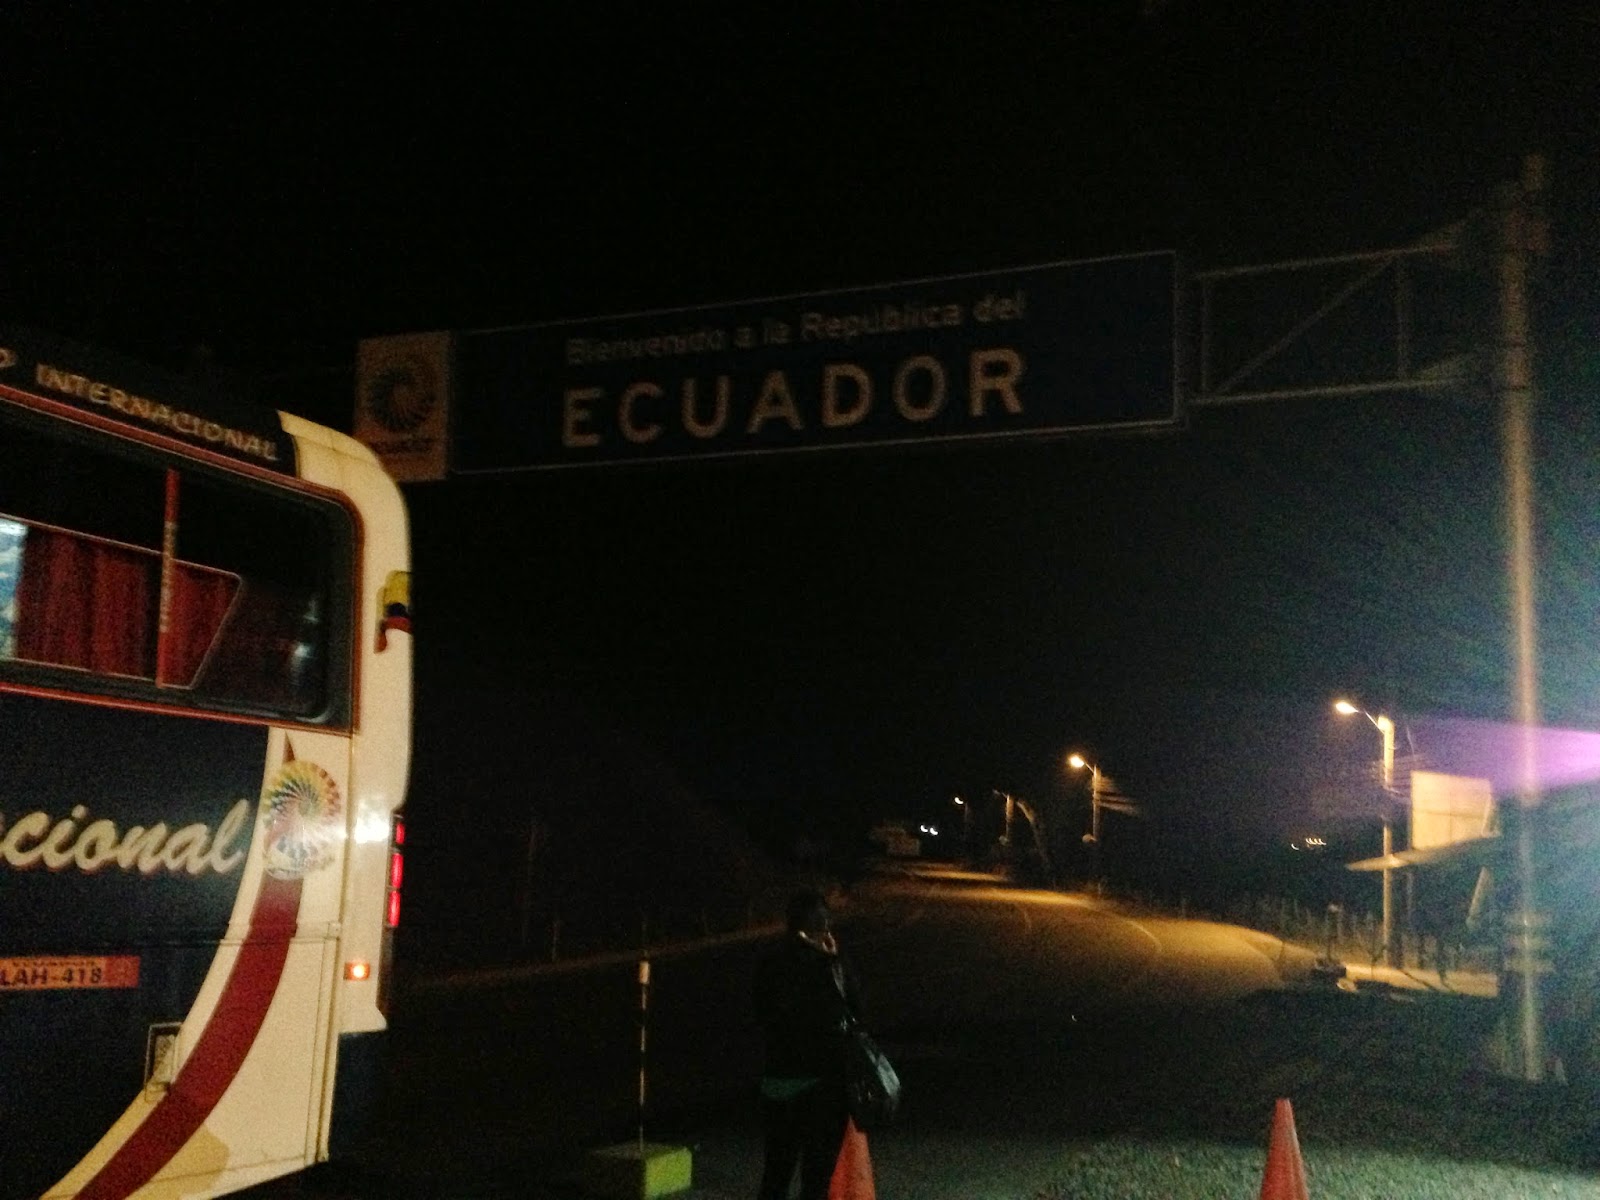 Border Crossing Ecuador to Peru Border Sign